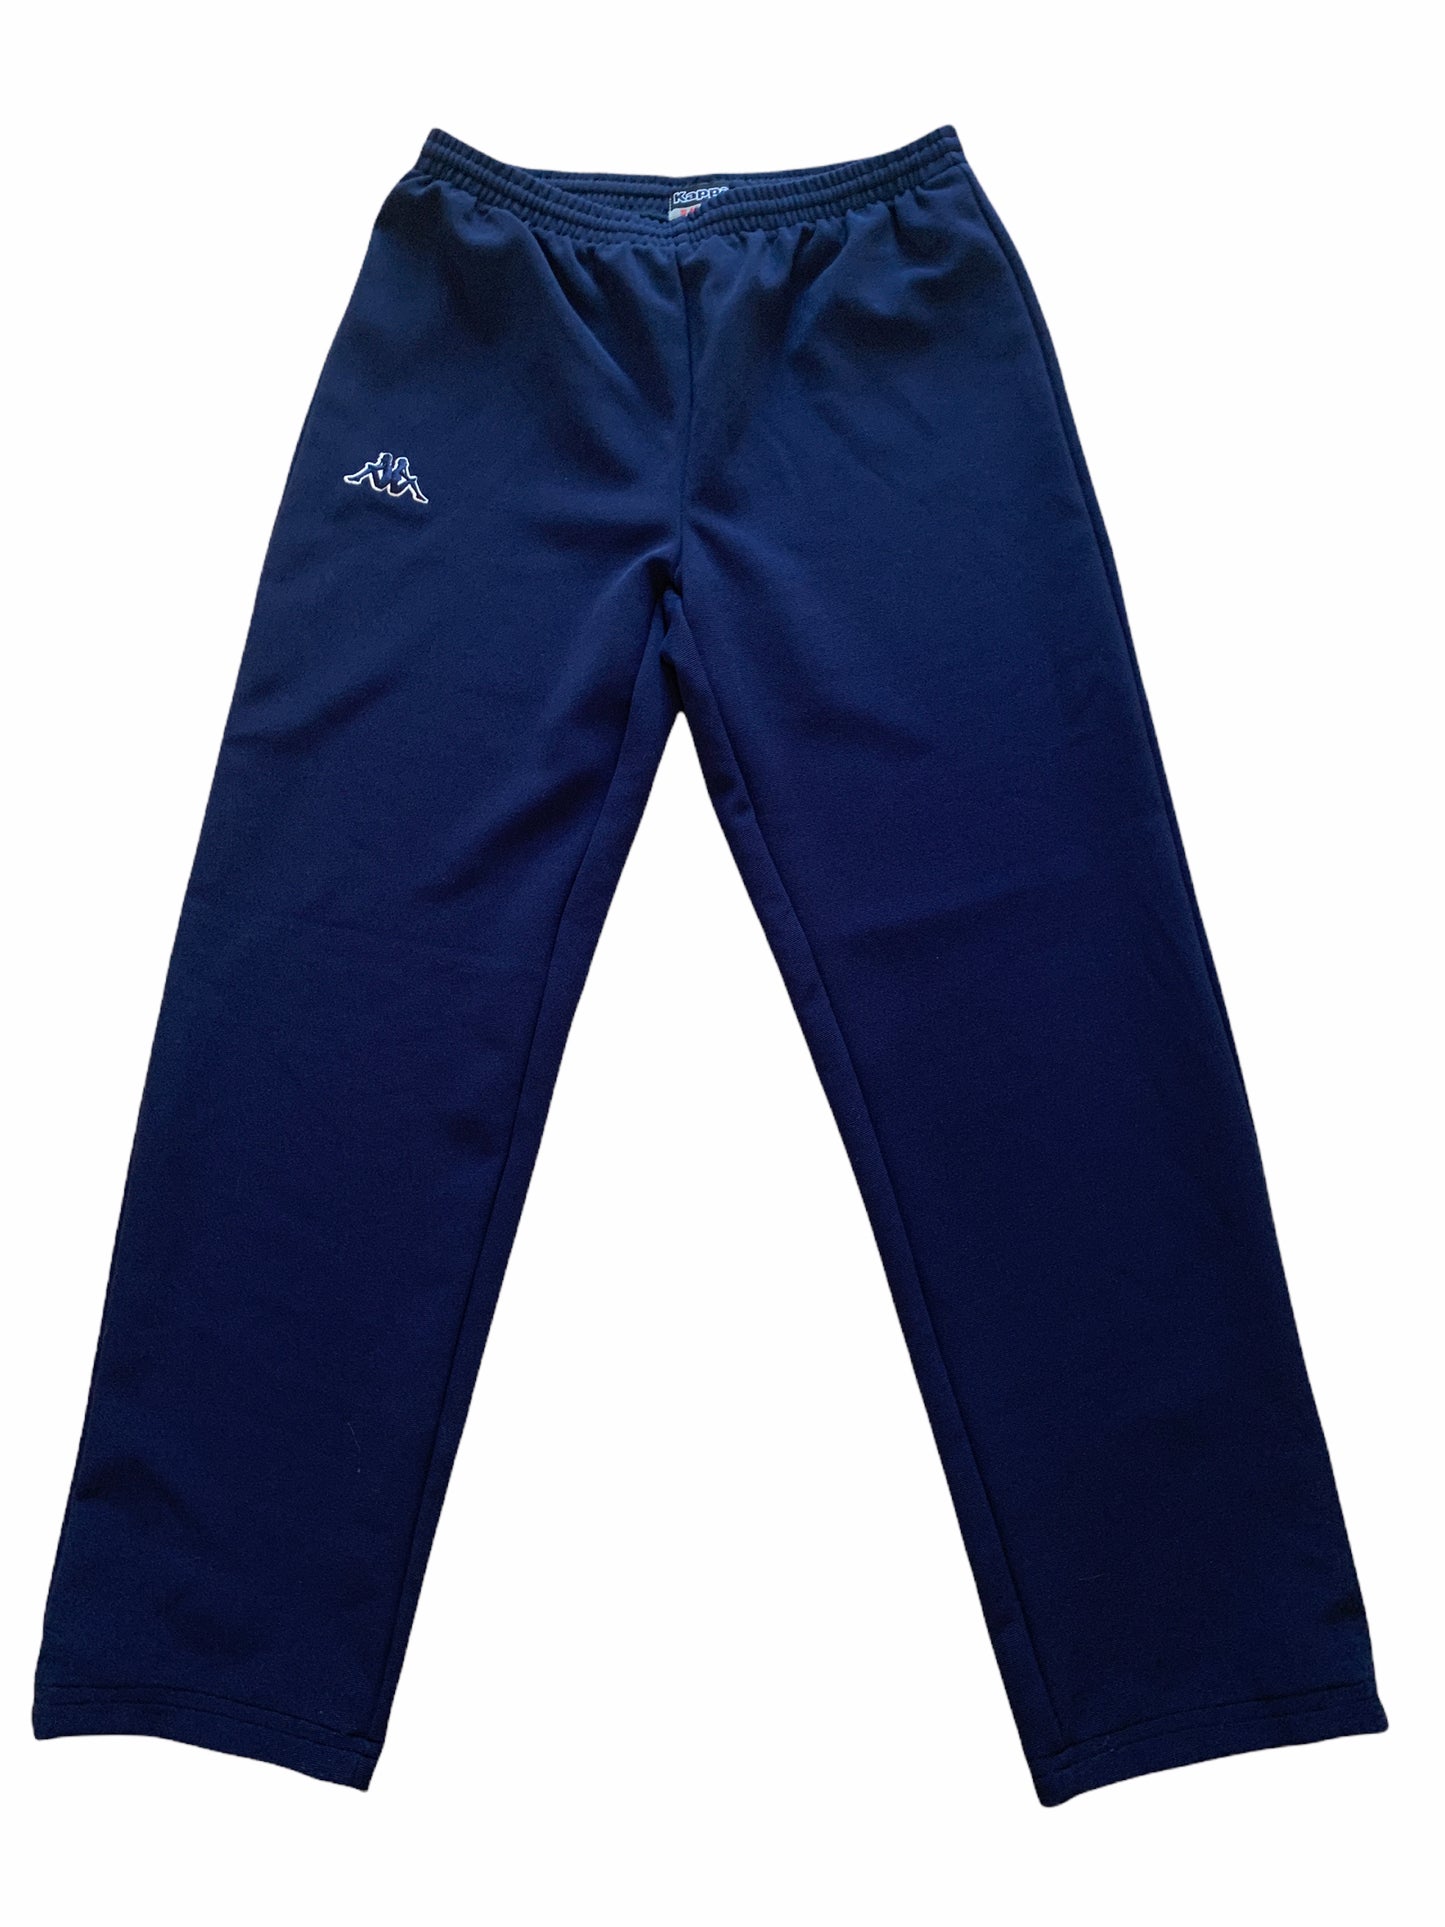 Kappa Men's tracksuit trousers blue S